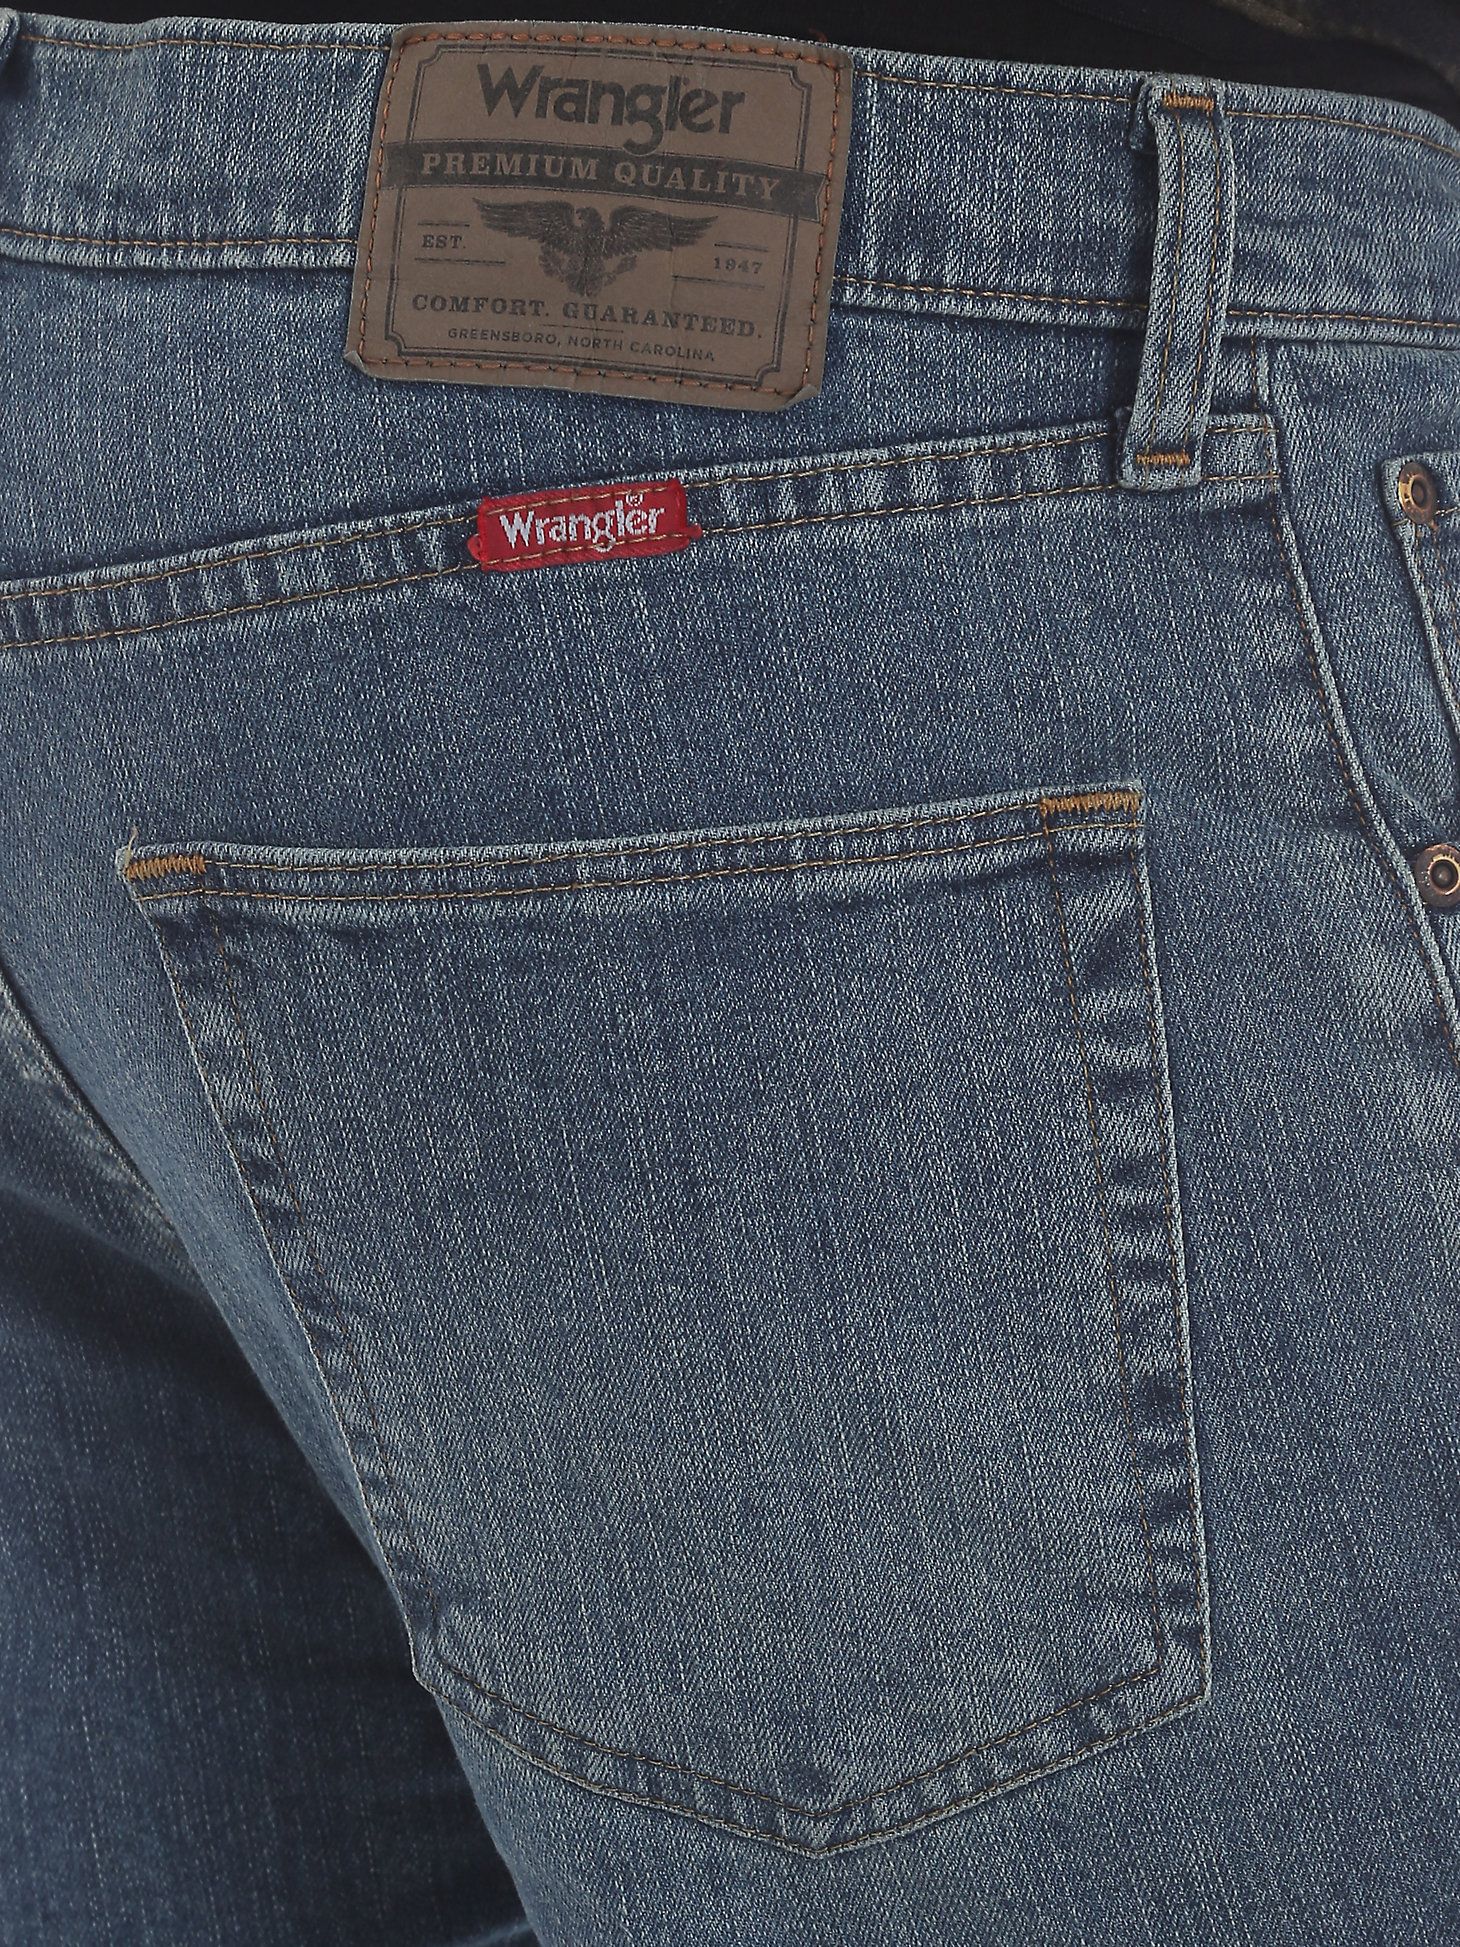 Wrangler® Five Star Premium Denim Flex For Comfort Straight Fit Jean in Tombstone alternative view 3